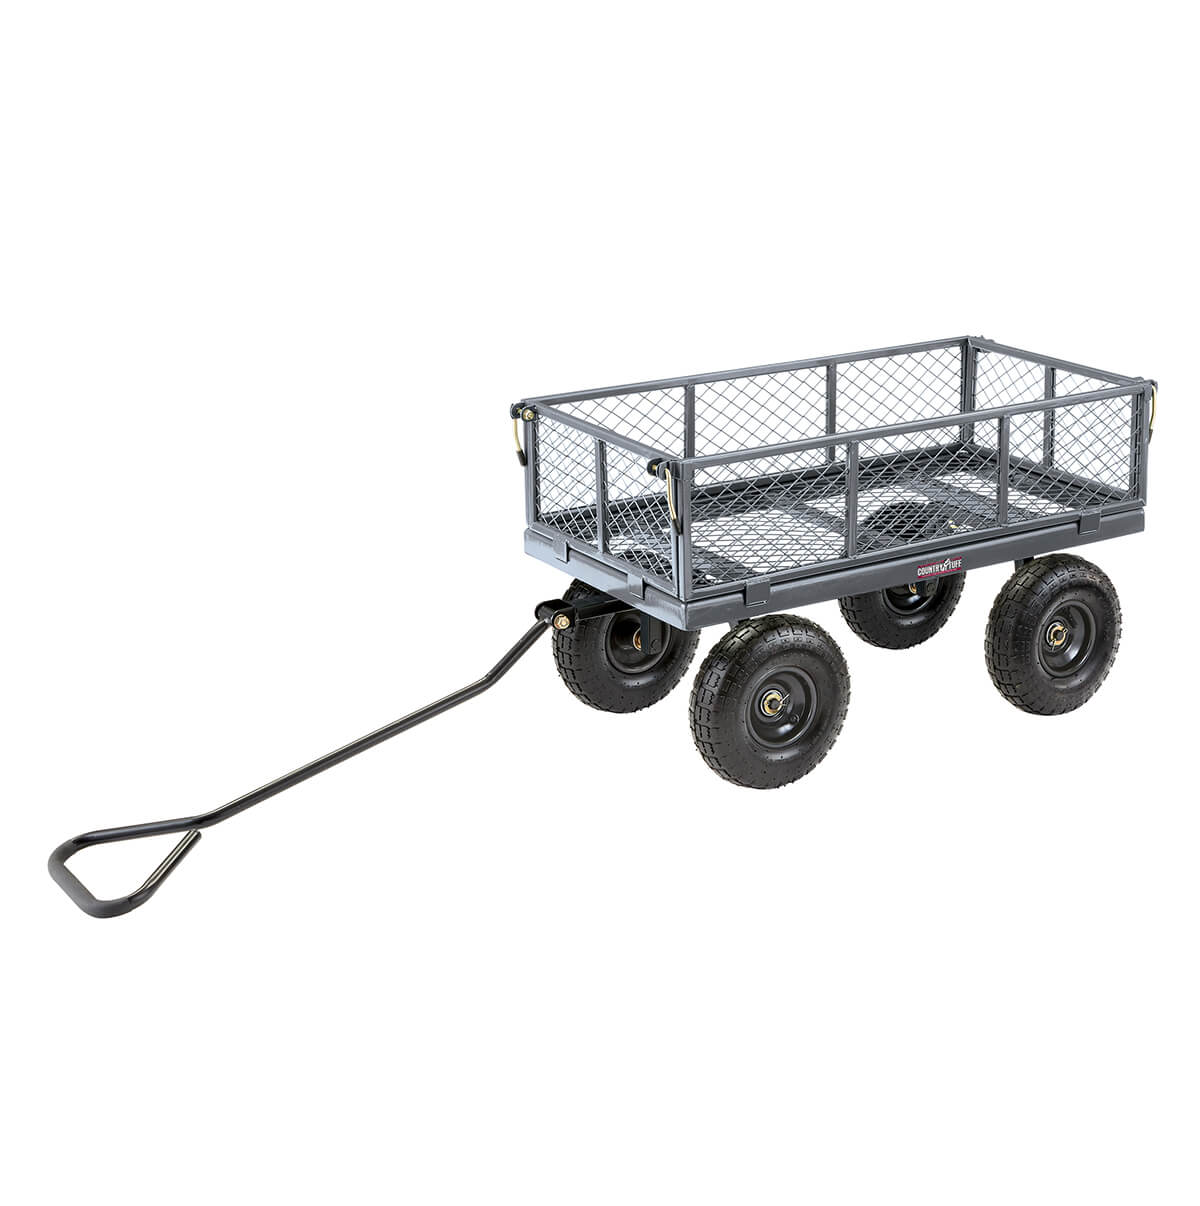 GORILLA CARTS 1,000 lb. Heavy-Duty Steel Utility Cart GOR1001-COM